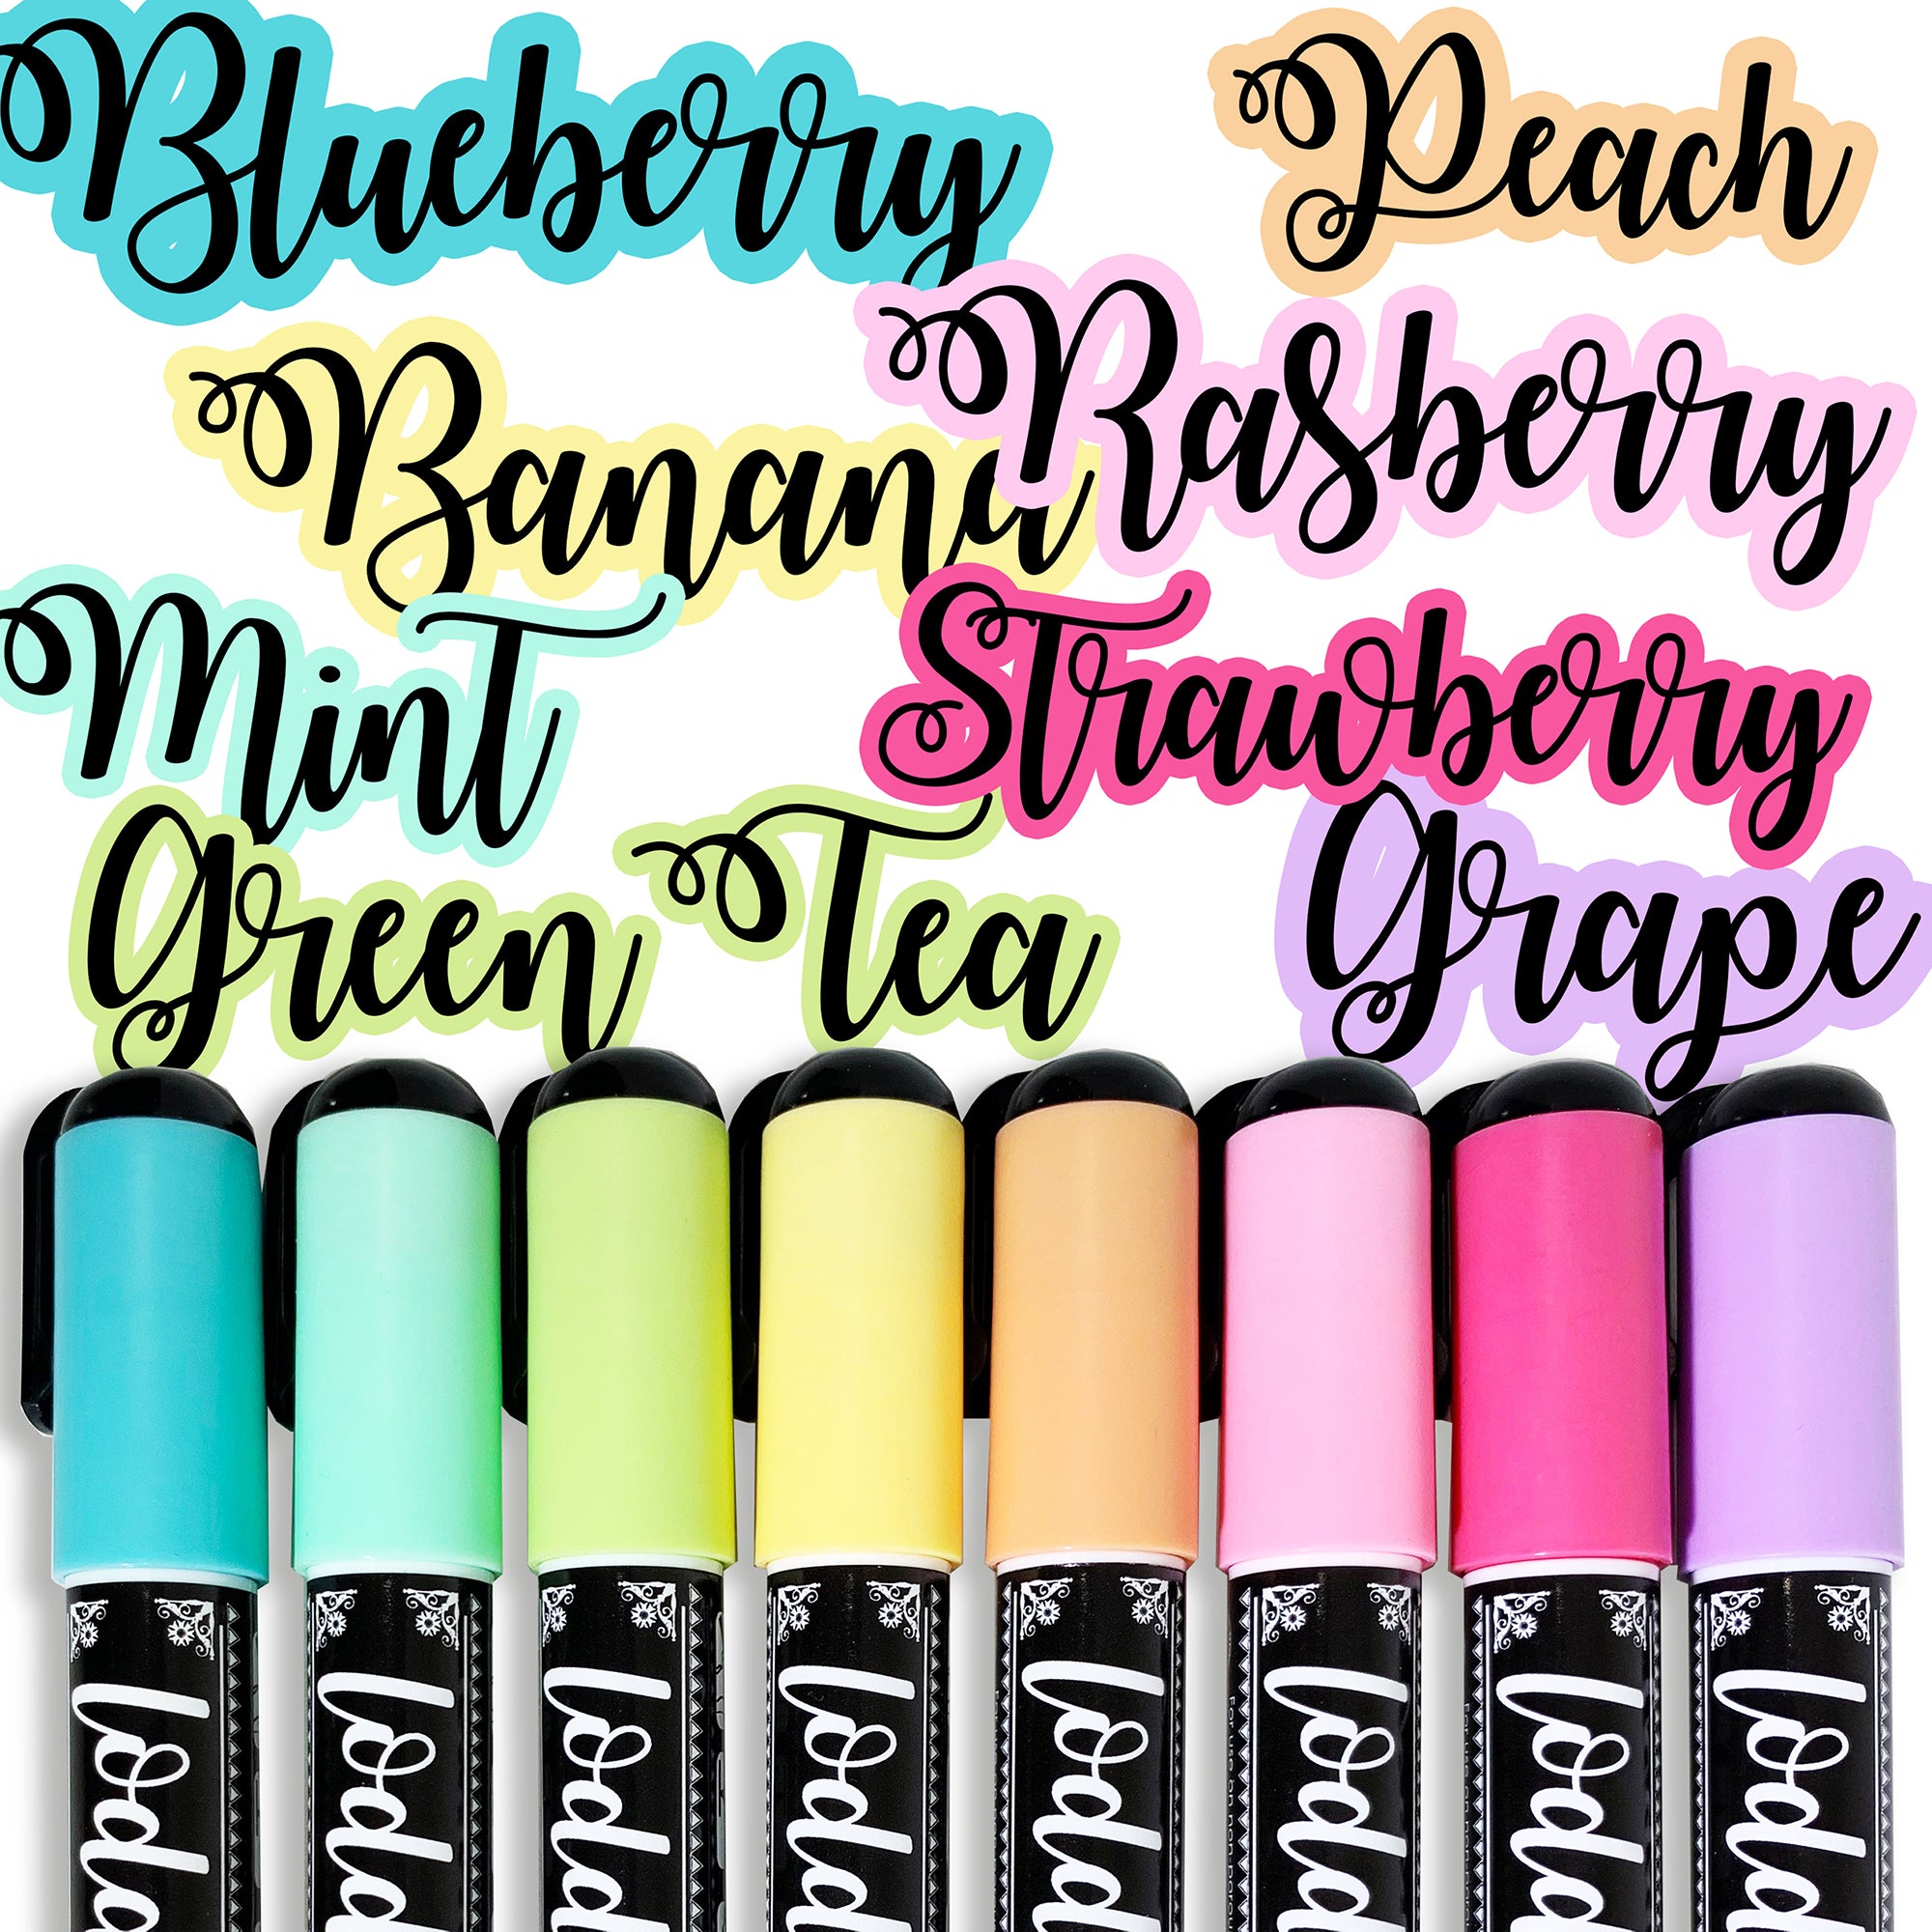 12 Colors Pastel Chalk Markers